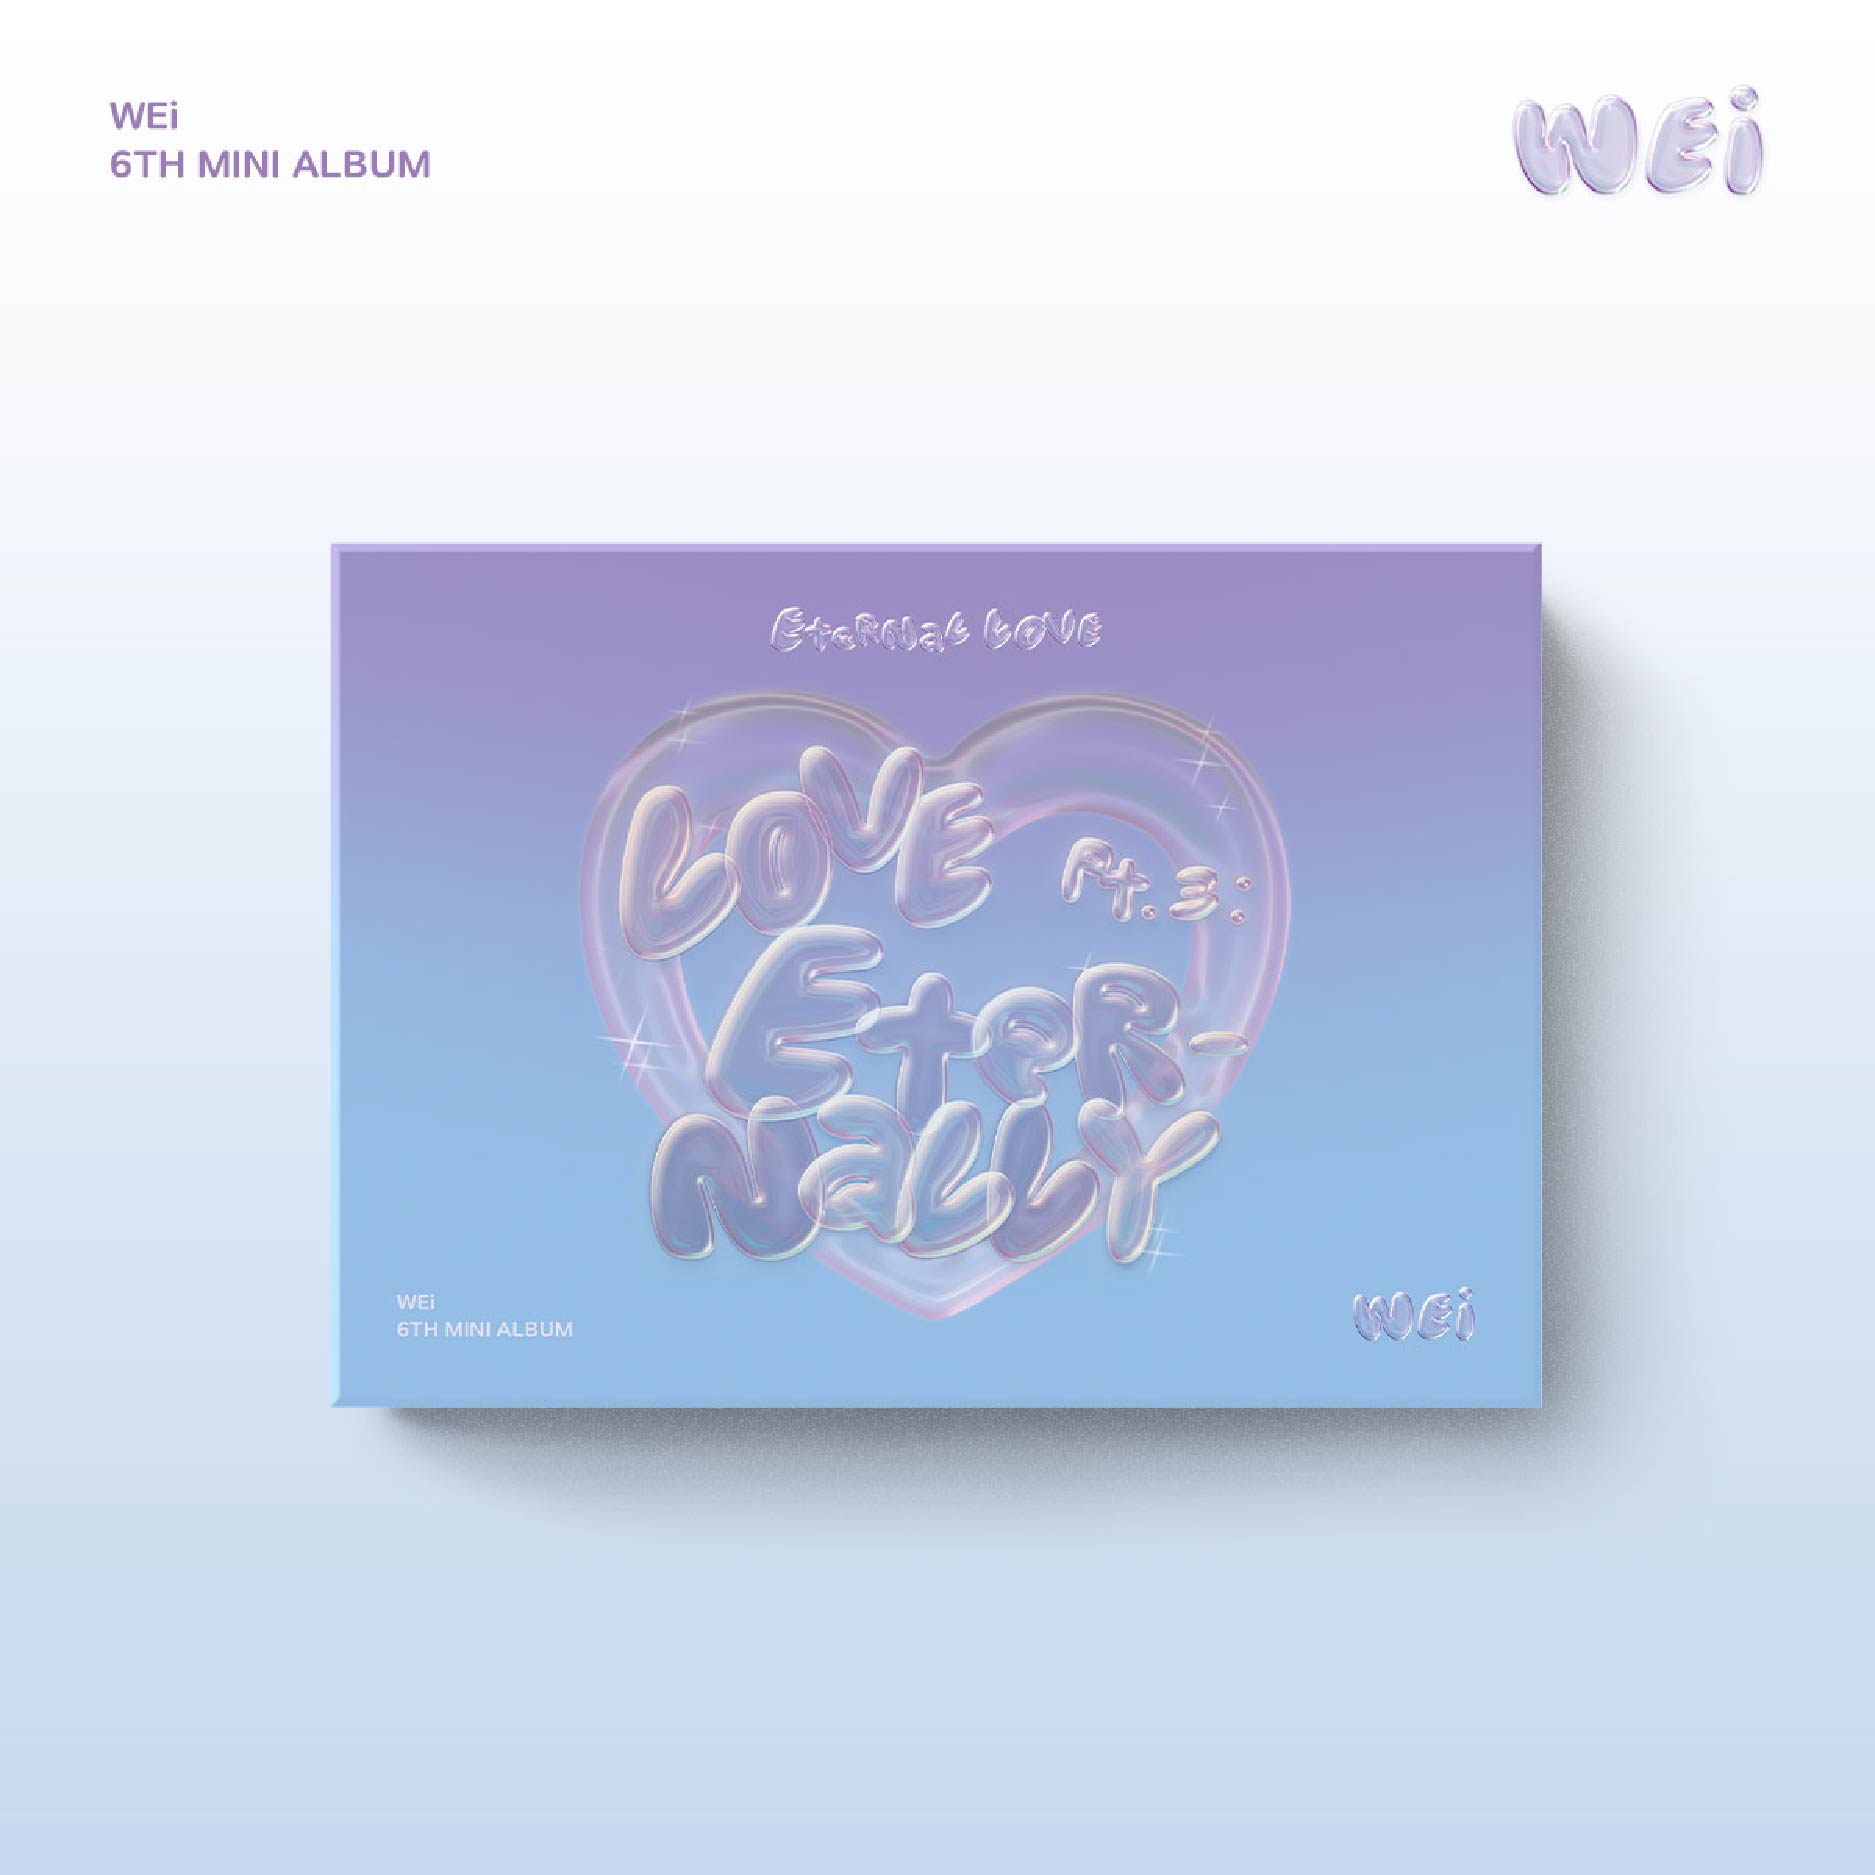 jp.ktown4u.com : [2CD セット] WEi - ミニアルバム6集 [Love Pt.3 